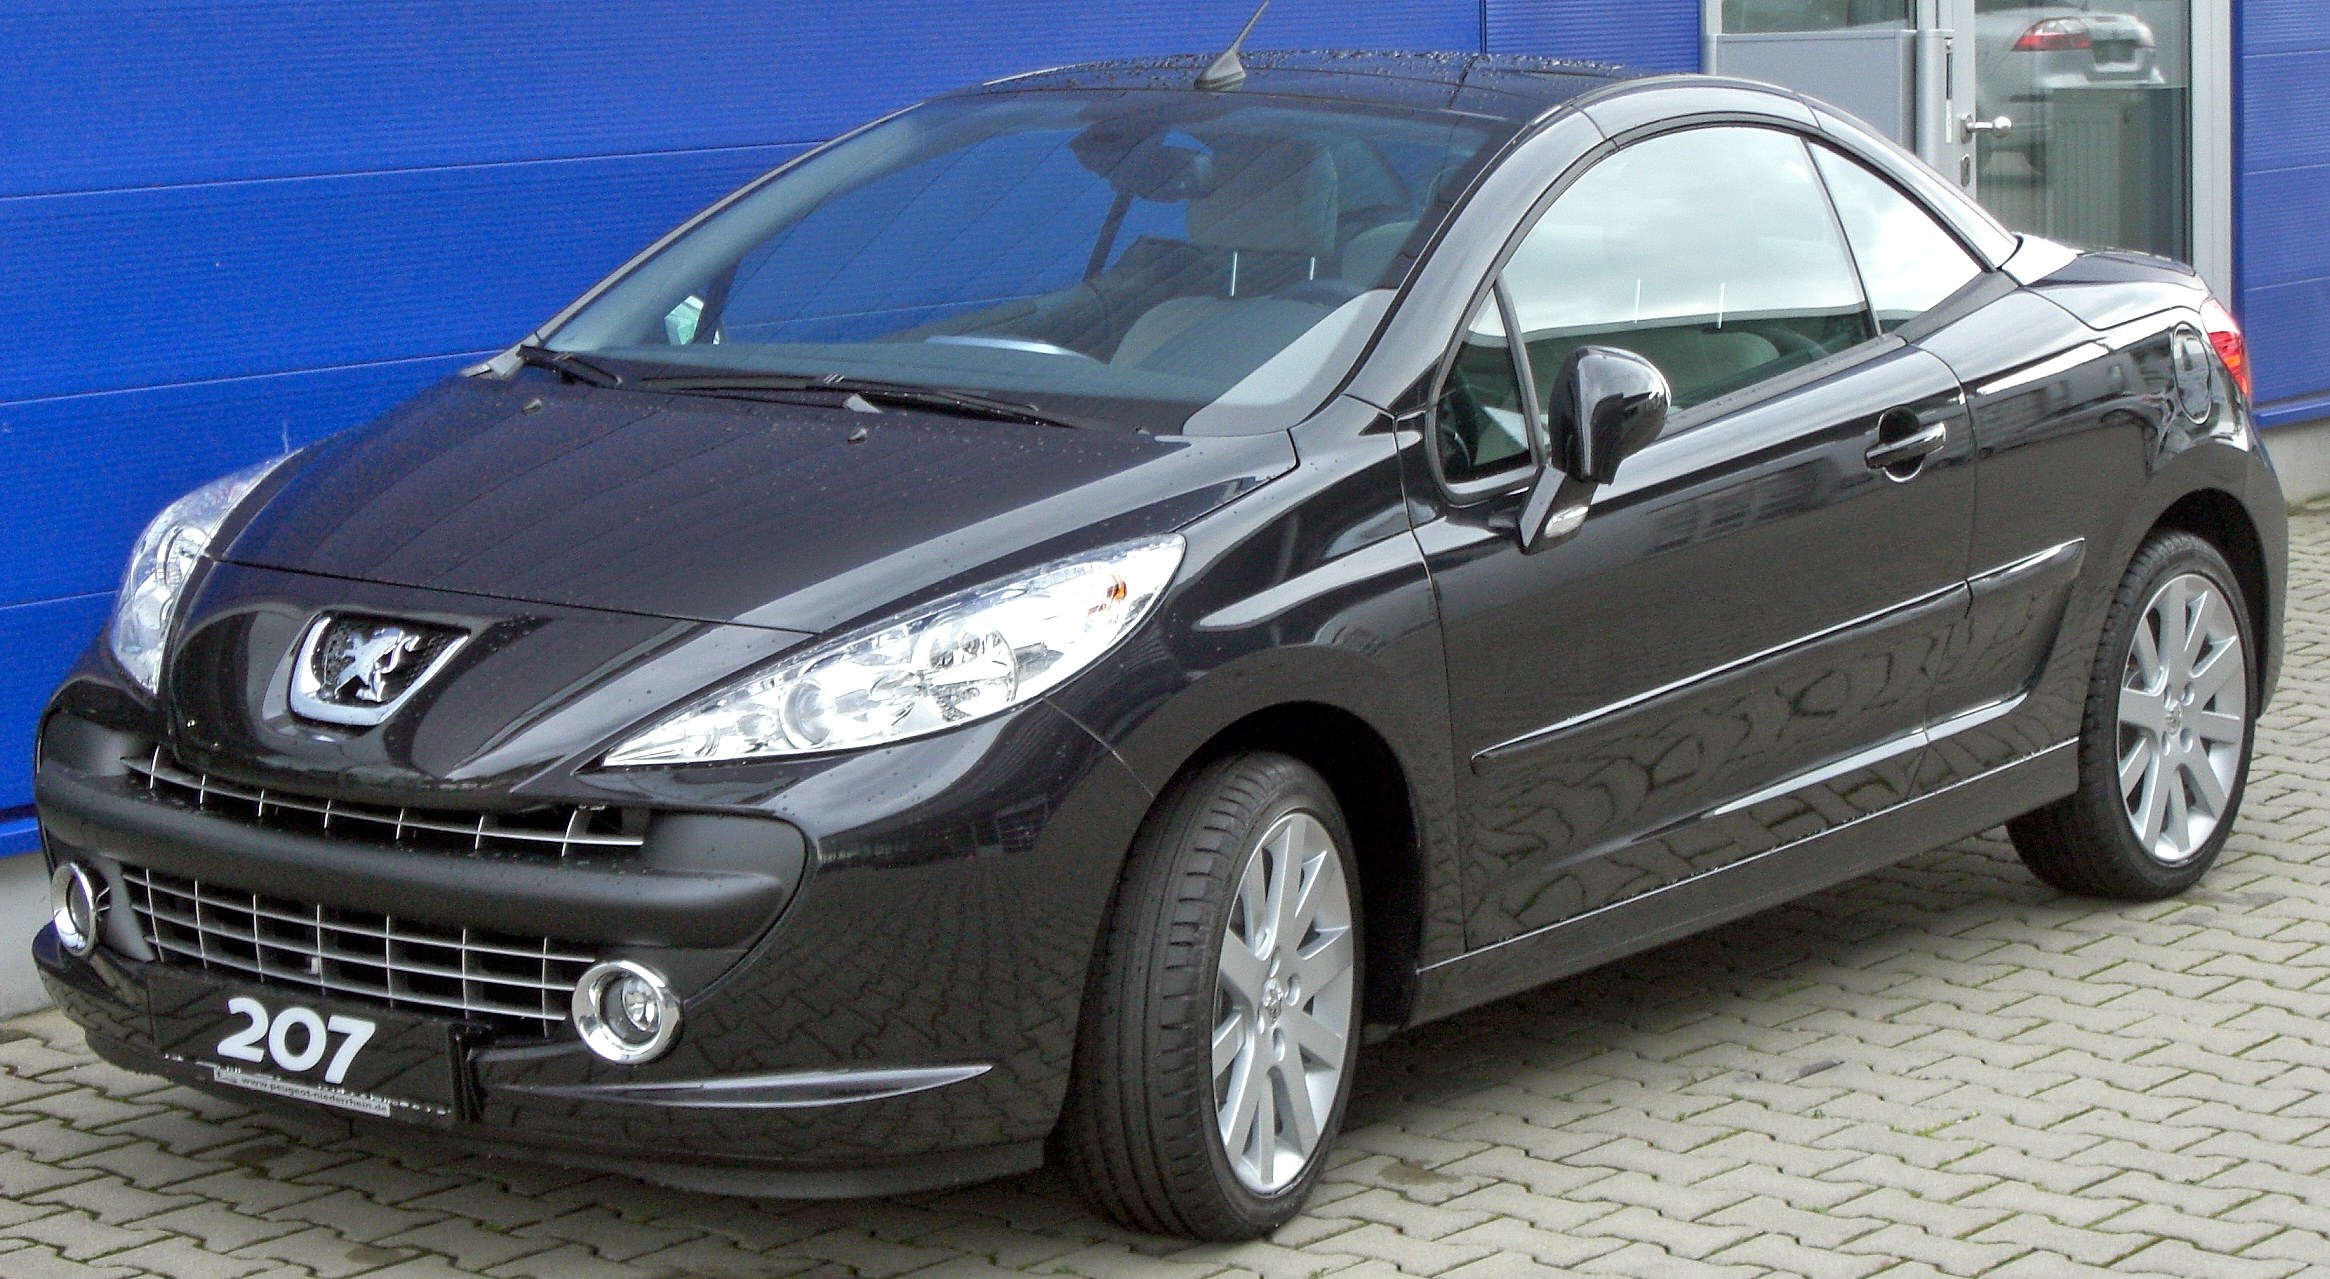 File:Peugeot 207CC front.JPG - Wikimedia Commons